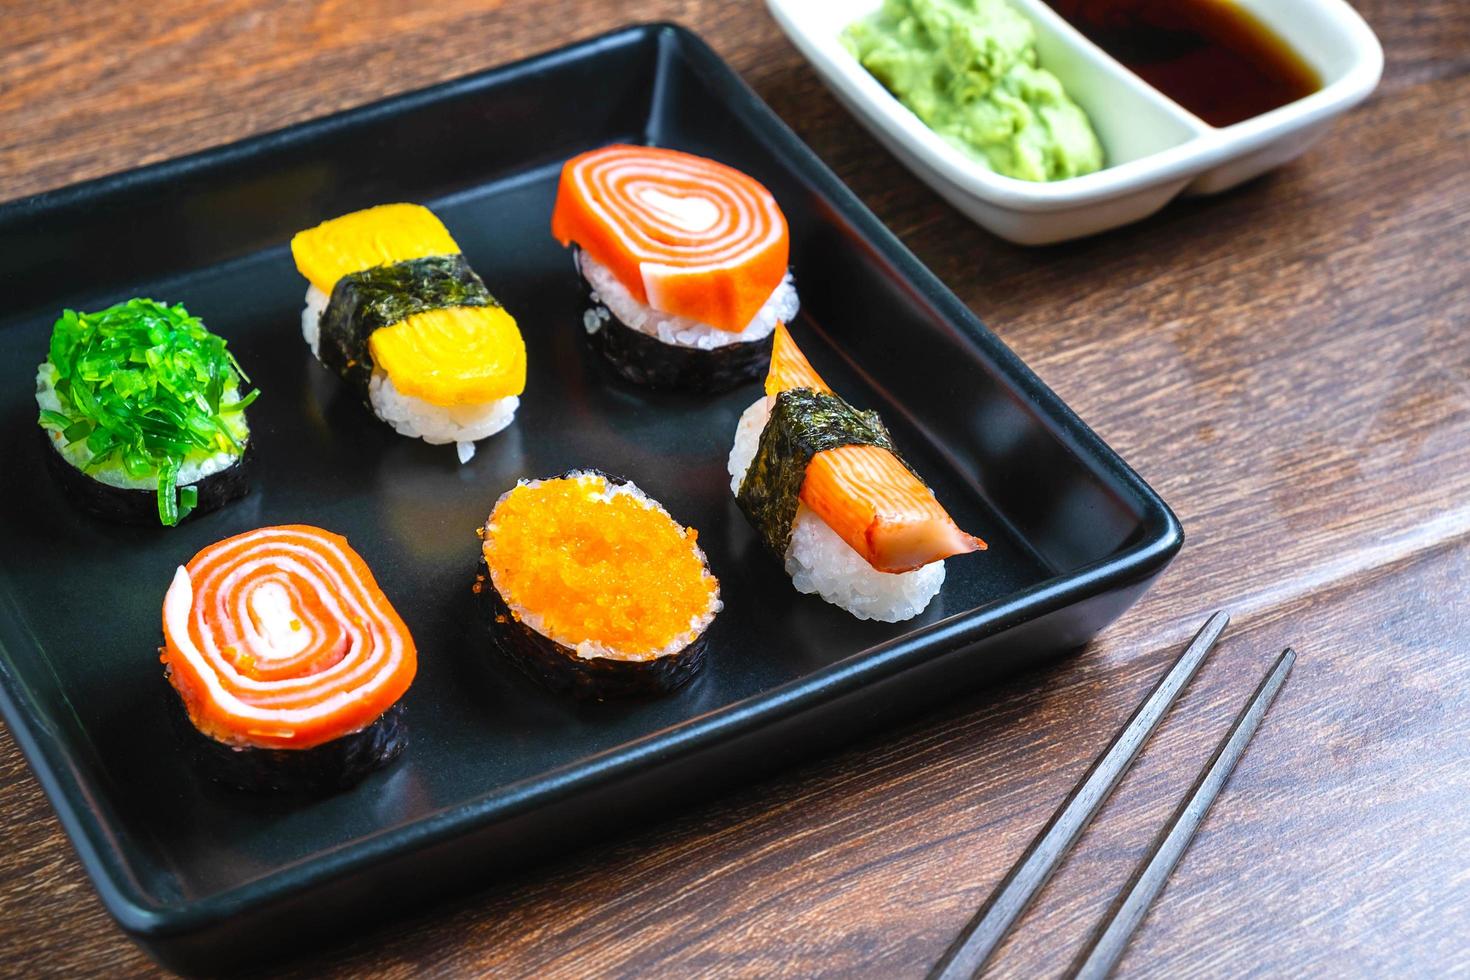 plato de sushi foto